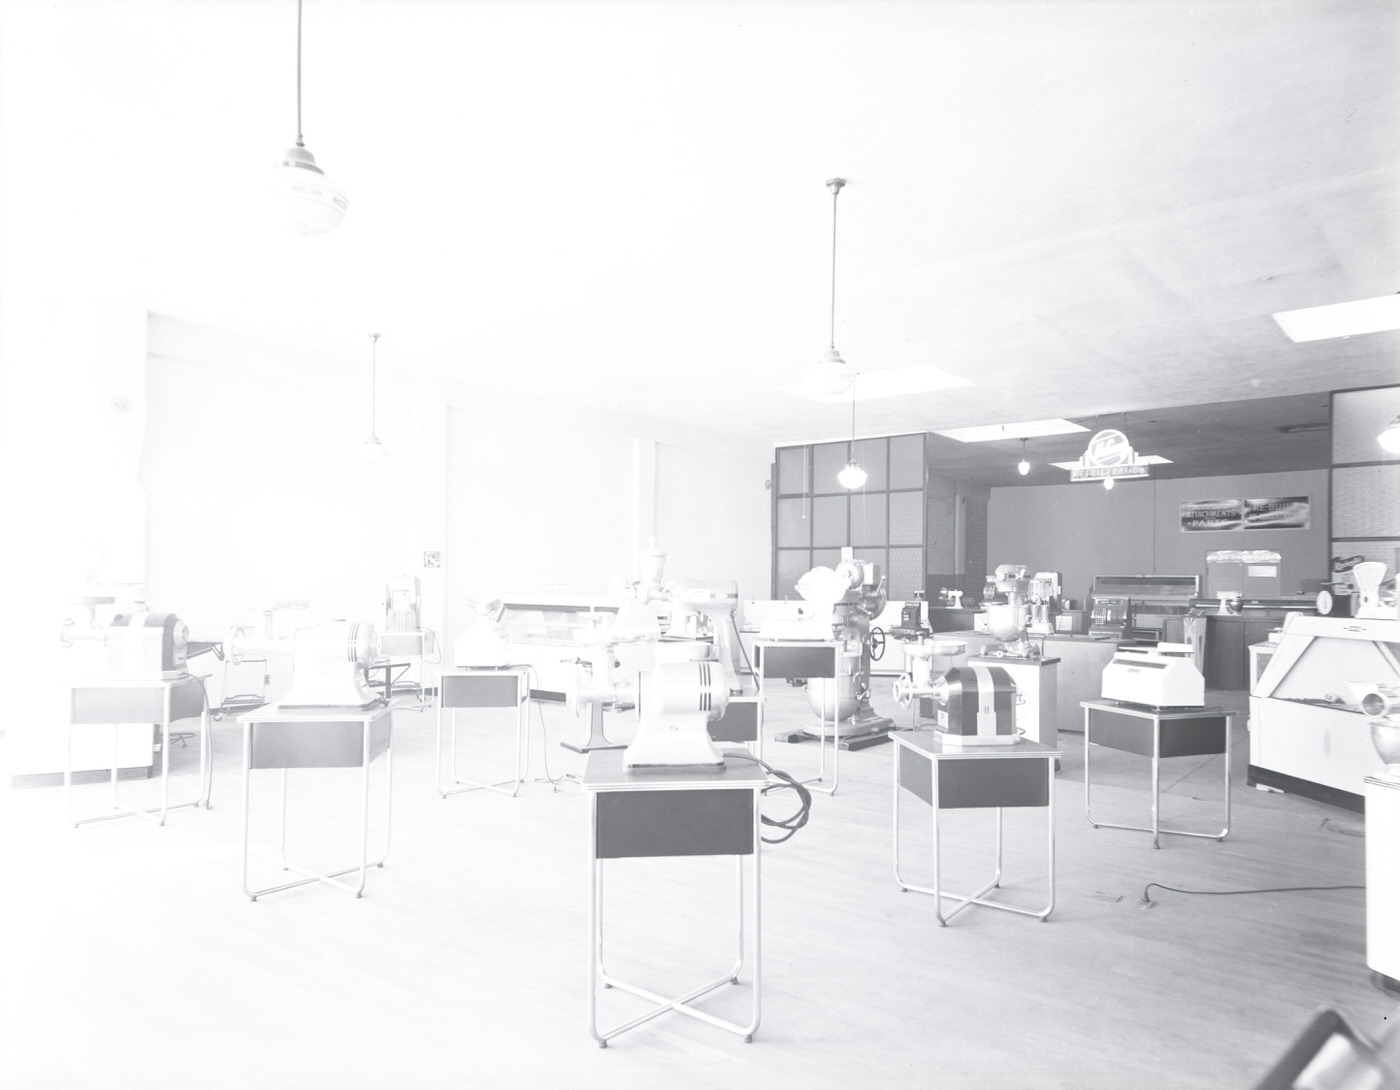 Frank Parmenter Co. Food Store Equipment Interior, 1941